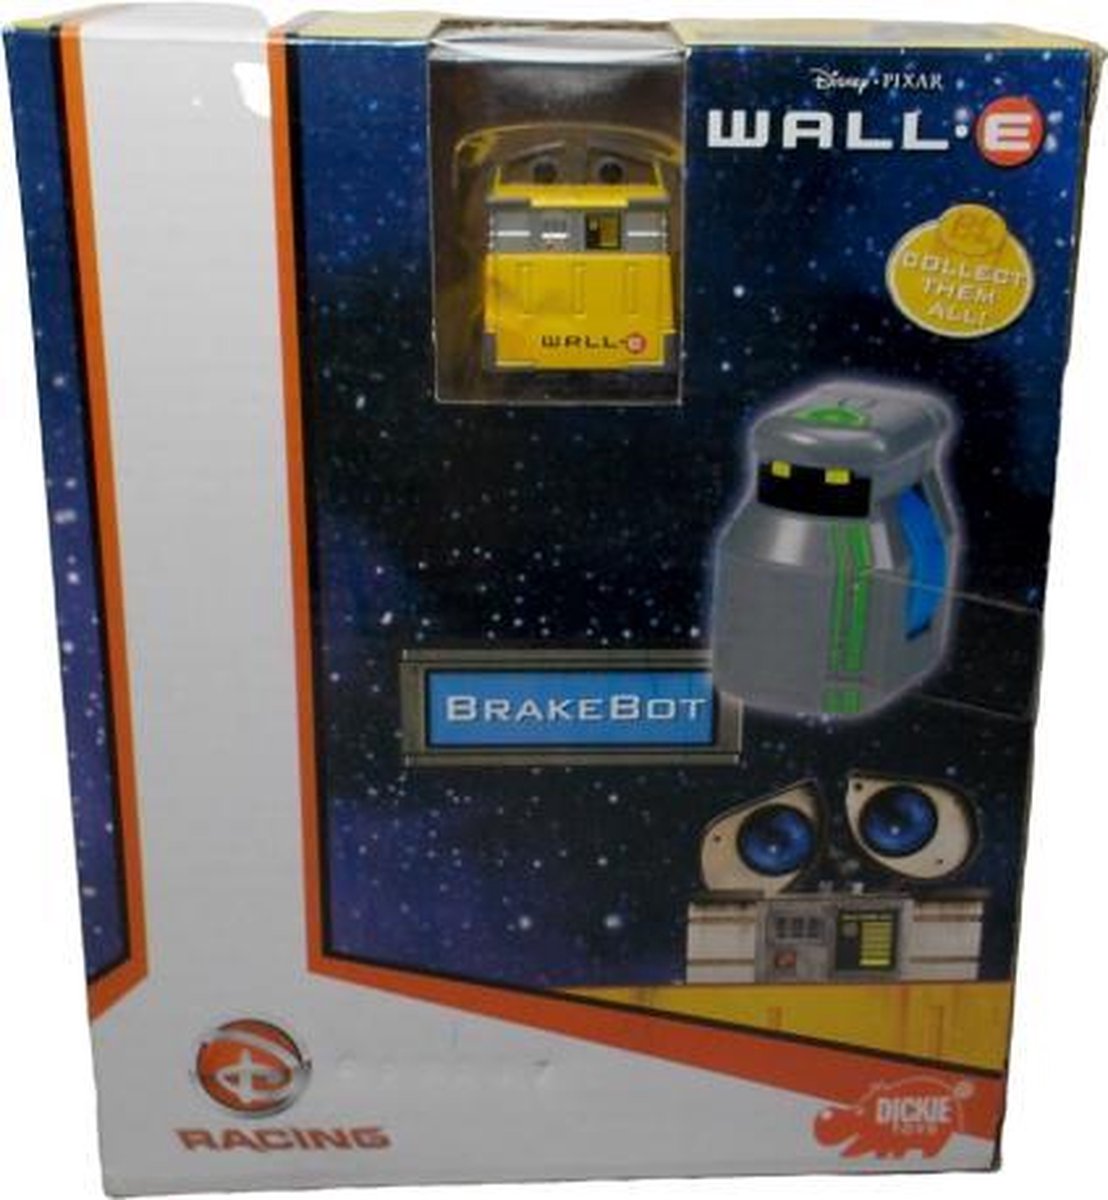 Disney Pixar Wall-E & Brakebot Dickie Toys